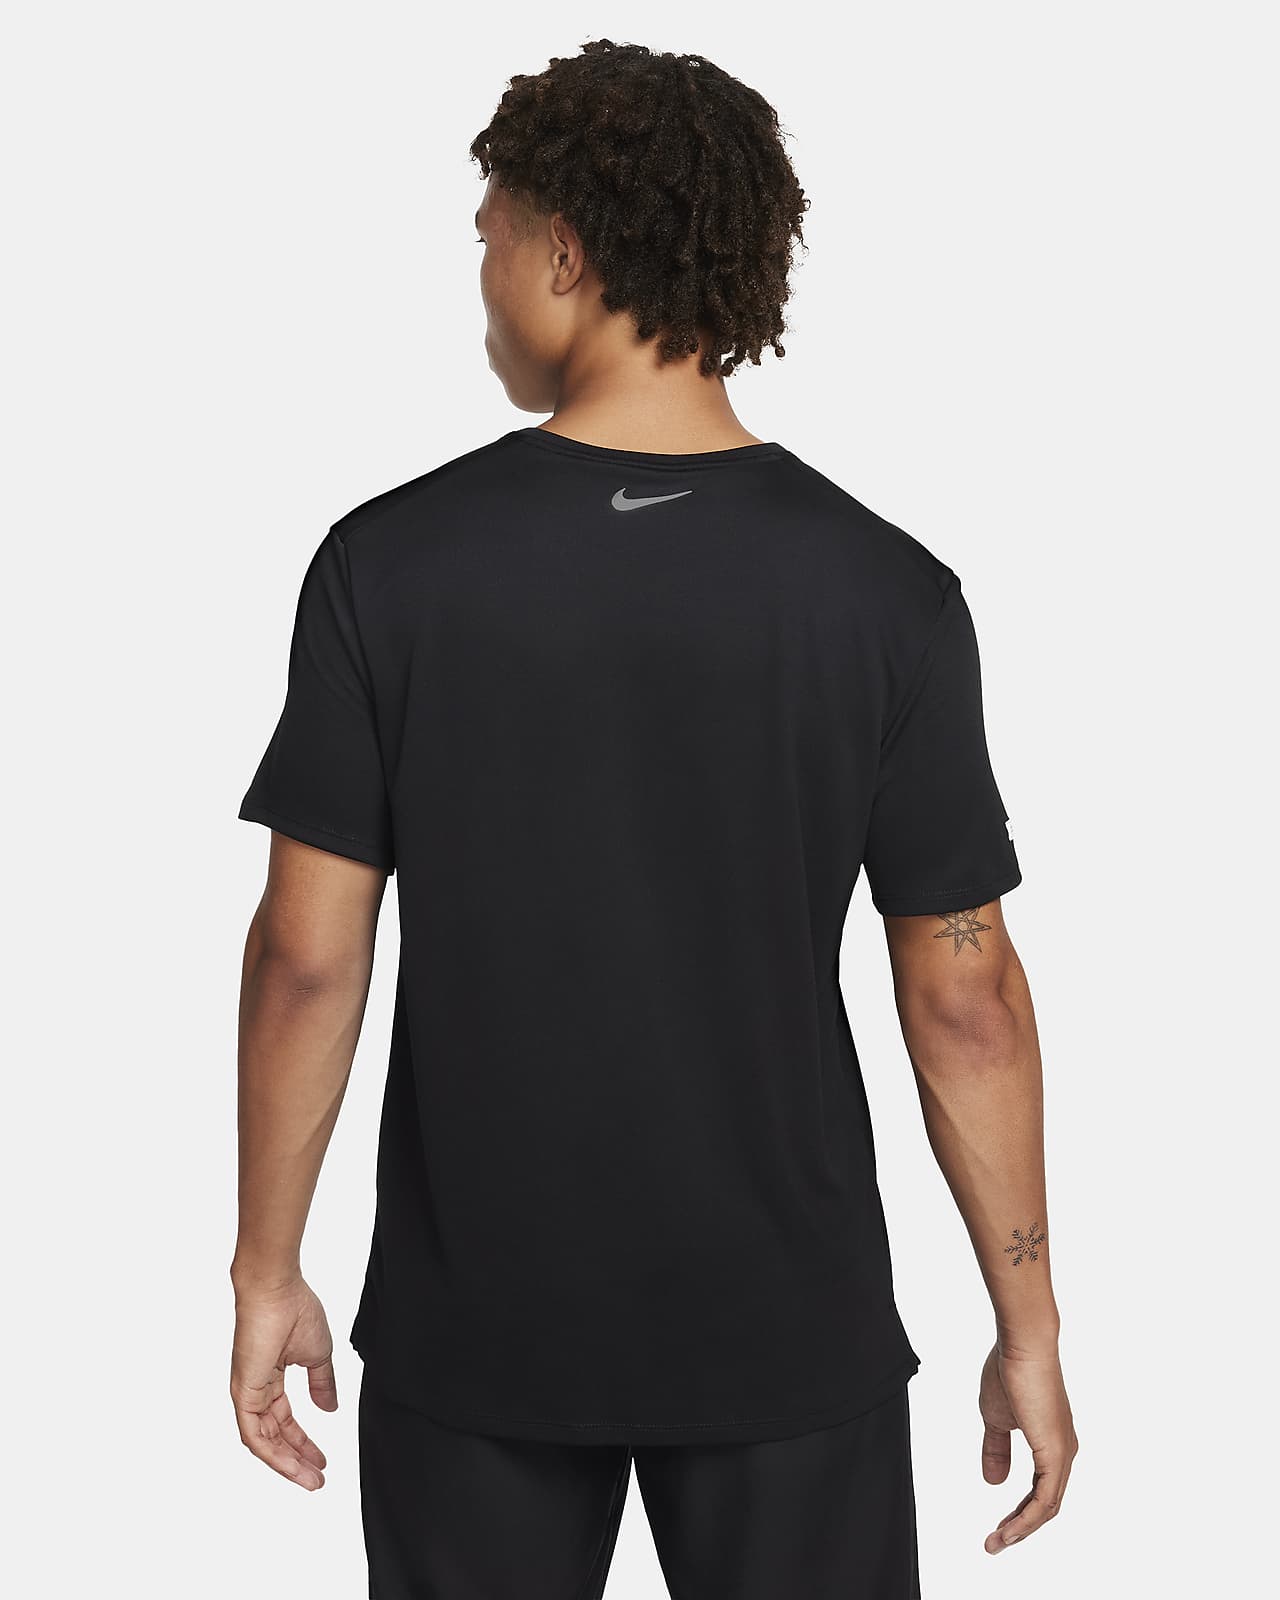 Nike Men Miler Dri-Fit UV Shirts Running Black Tee Top Shirt Jersey  FB7071-010